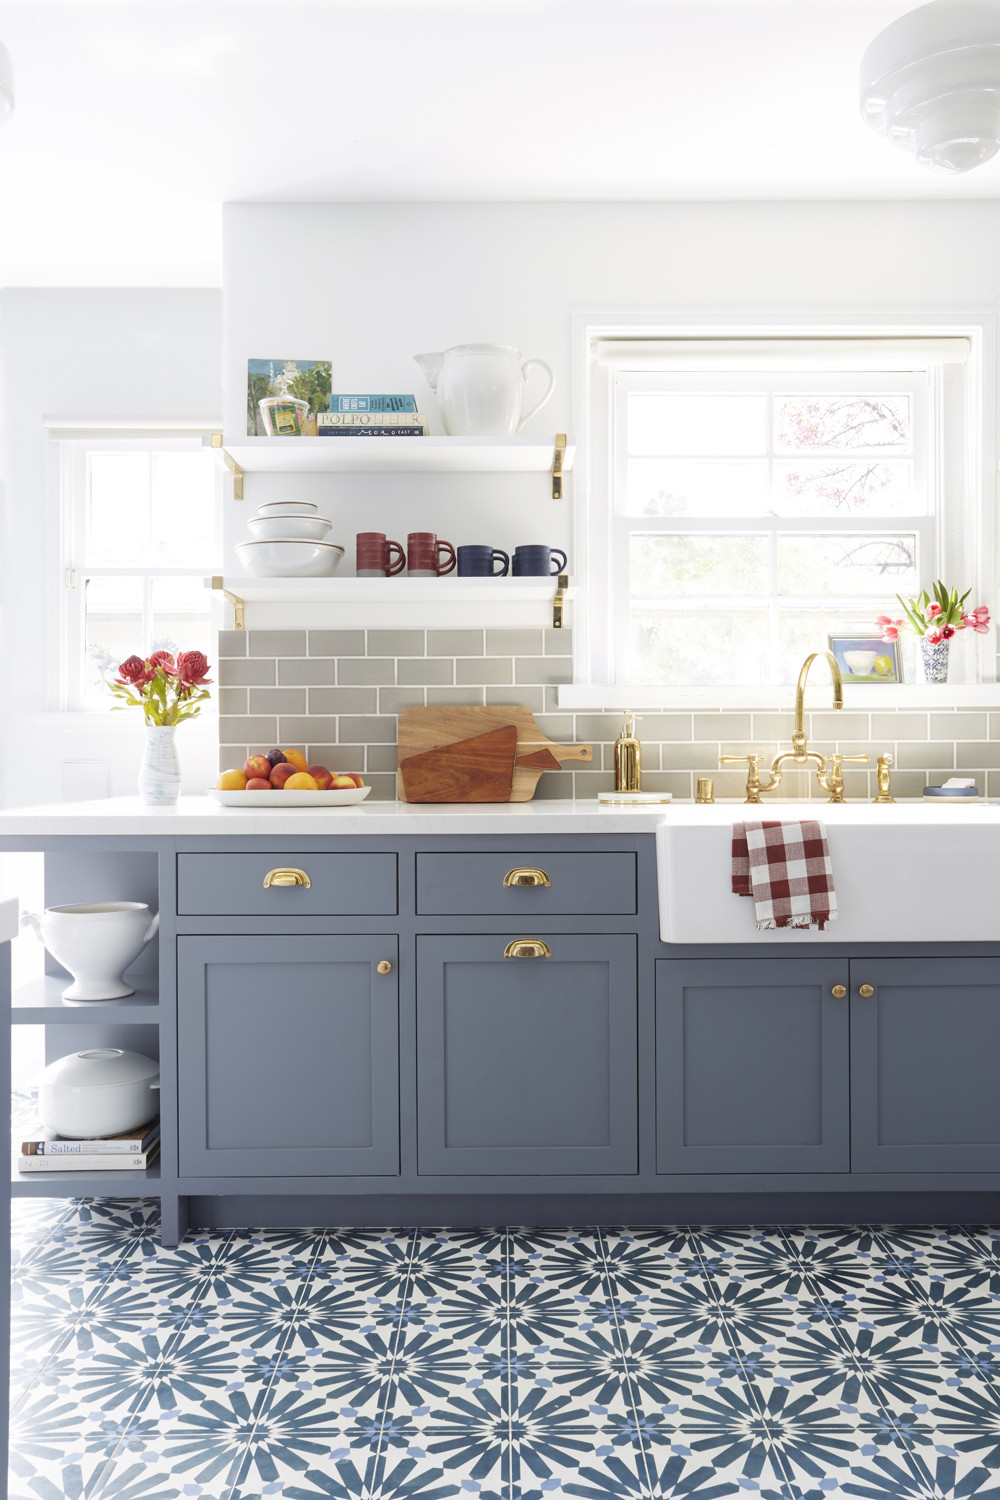 Best ideas about Blue Kitchen Decor
. Save or Pin Blue and White Kitchen Decor Inspiration 40 Ideas Now.